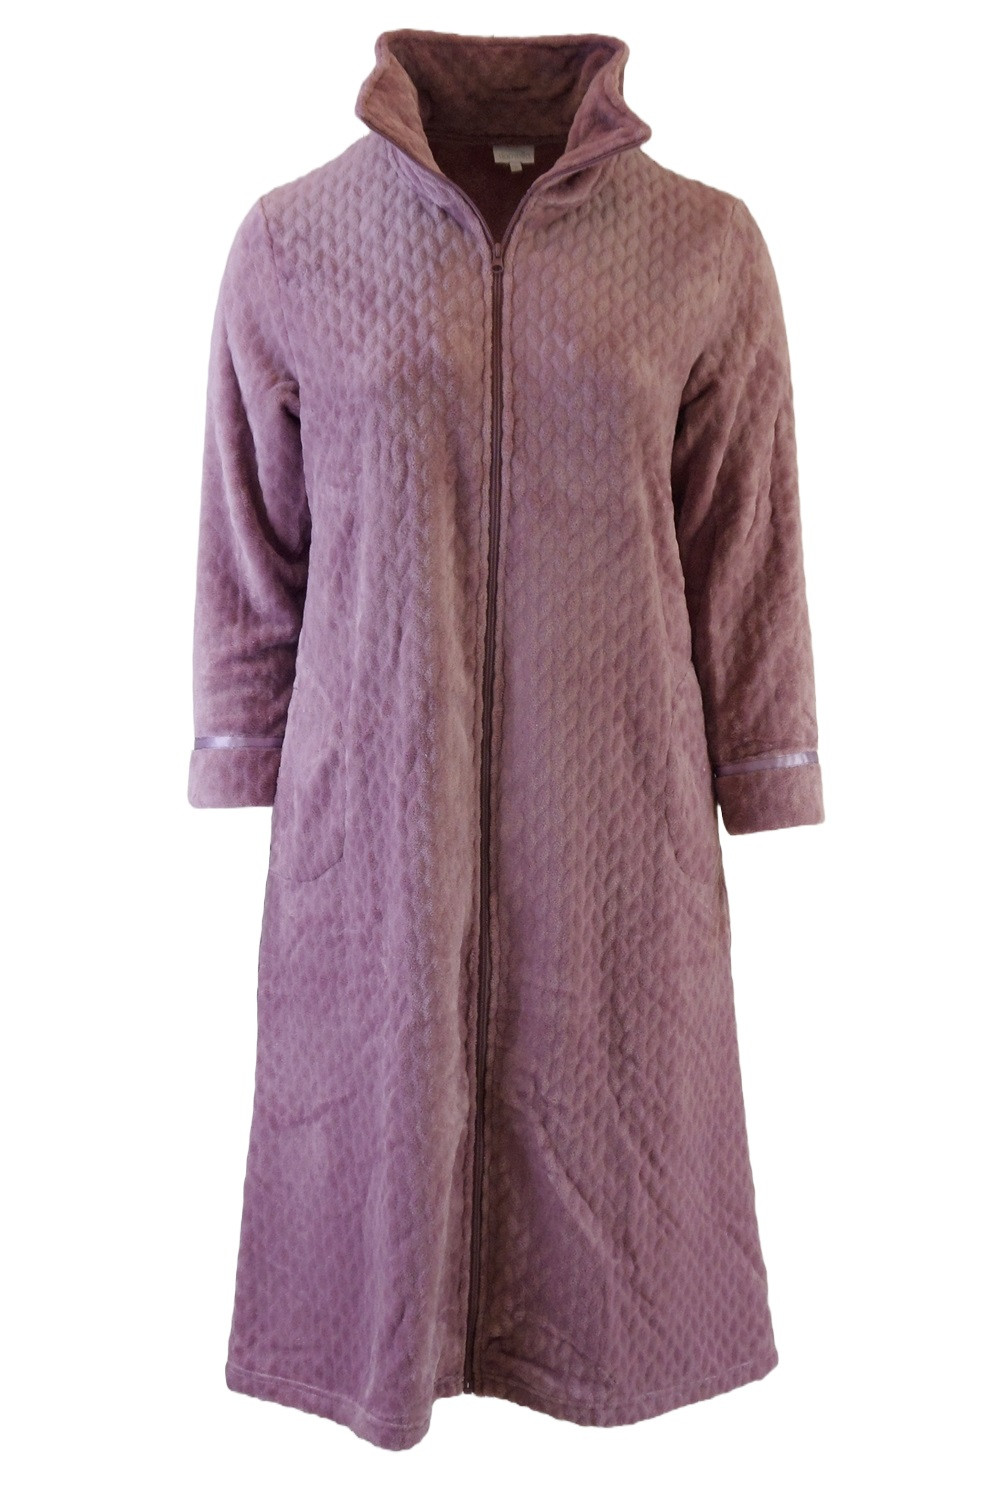 https://aldipa.gr/eshop/11763-superlarge_default/long-robe-with-zipper-and-pockets-made-of-warm-fleece-fabric-9774.jpg